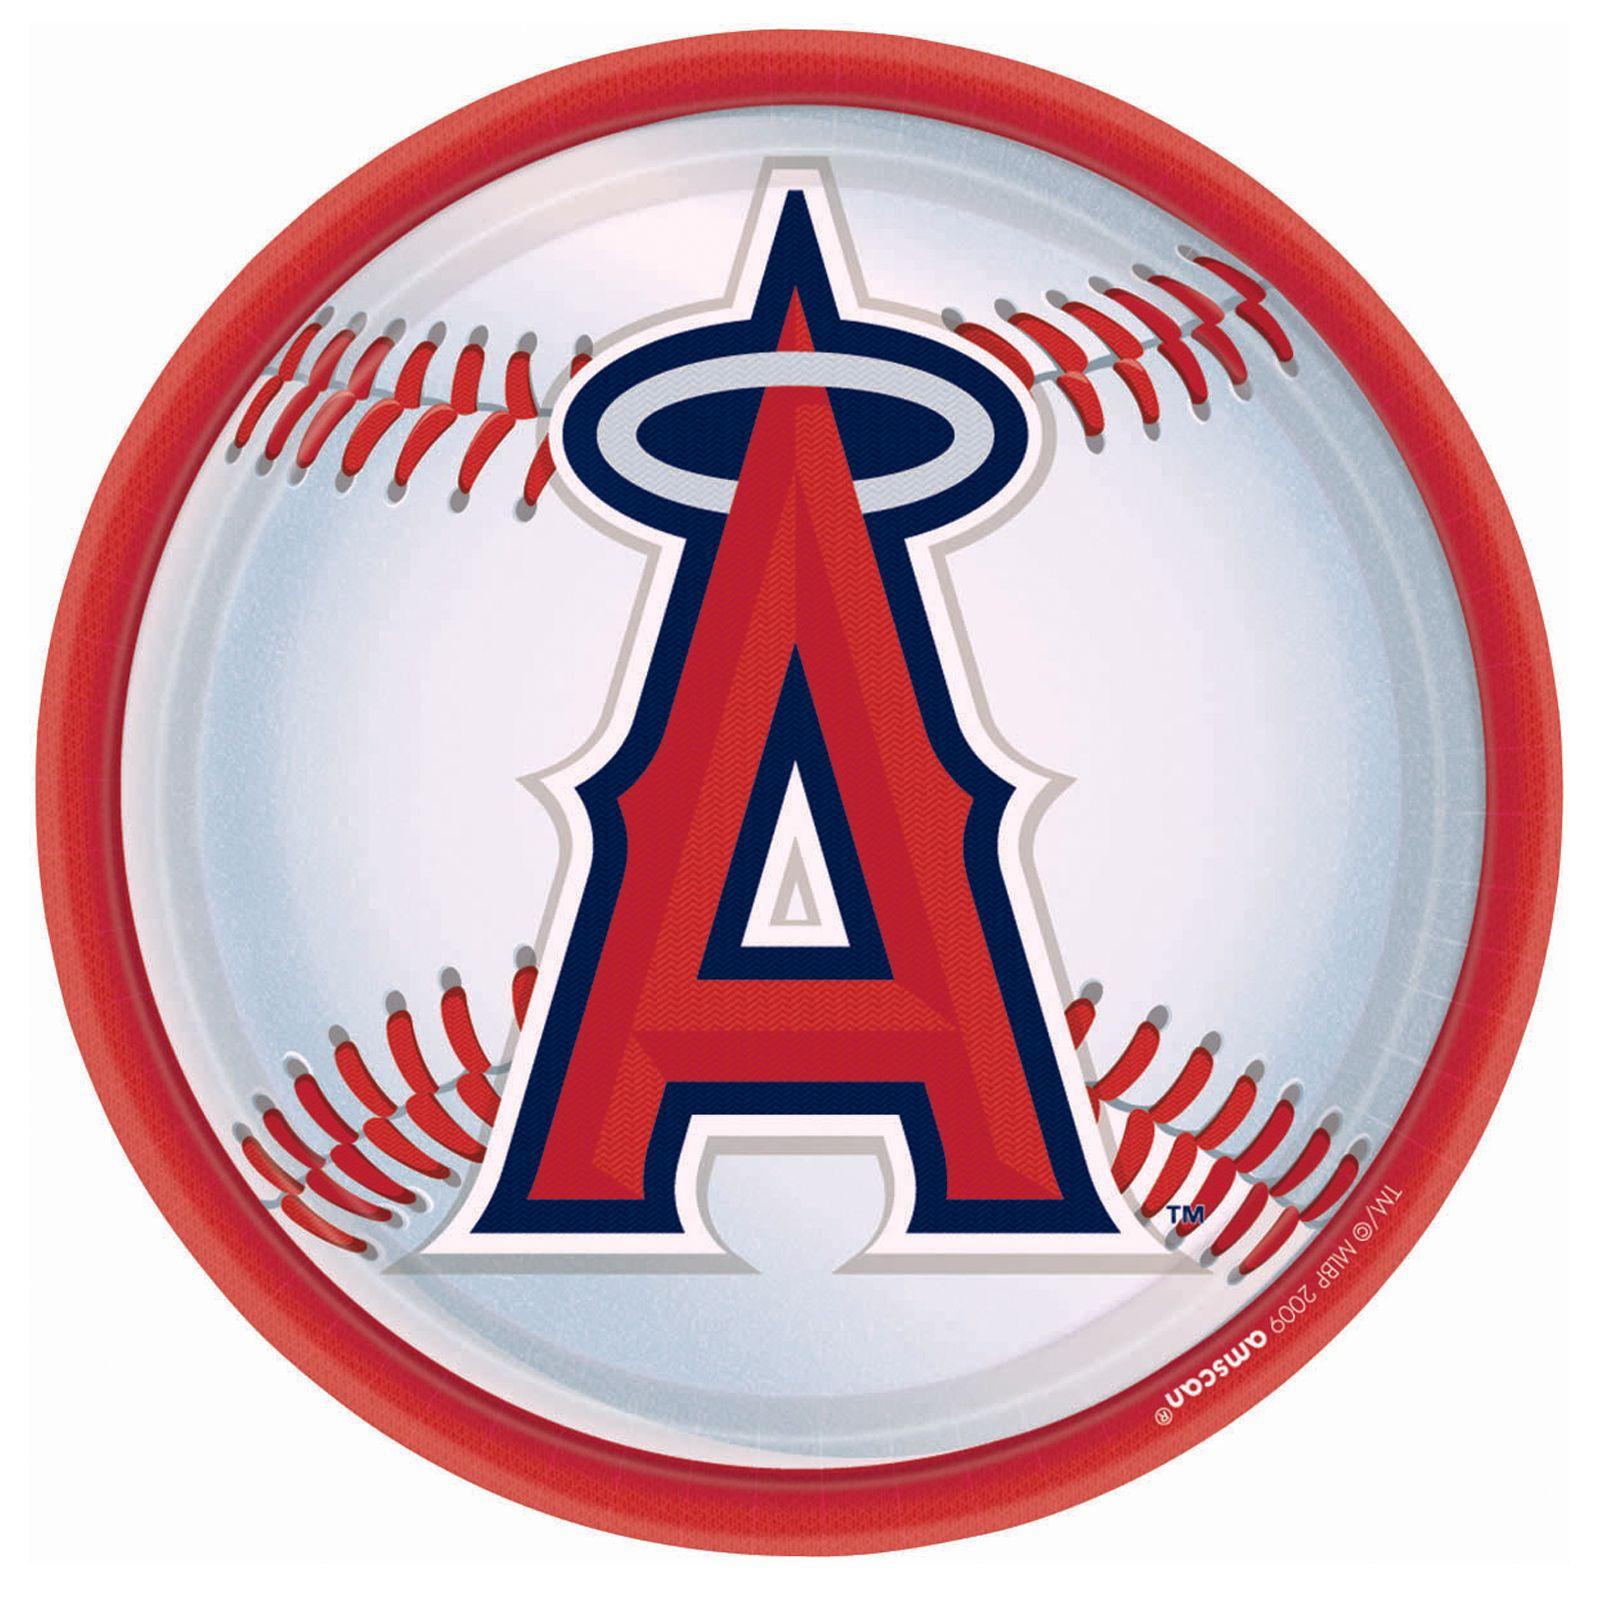 Los Angeles Angels Logo - Free Angels Baseball, Download Free Clip Art, Free Clip Art on ...